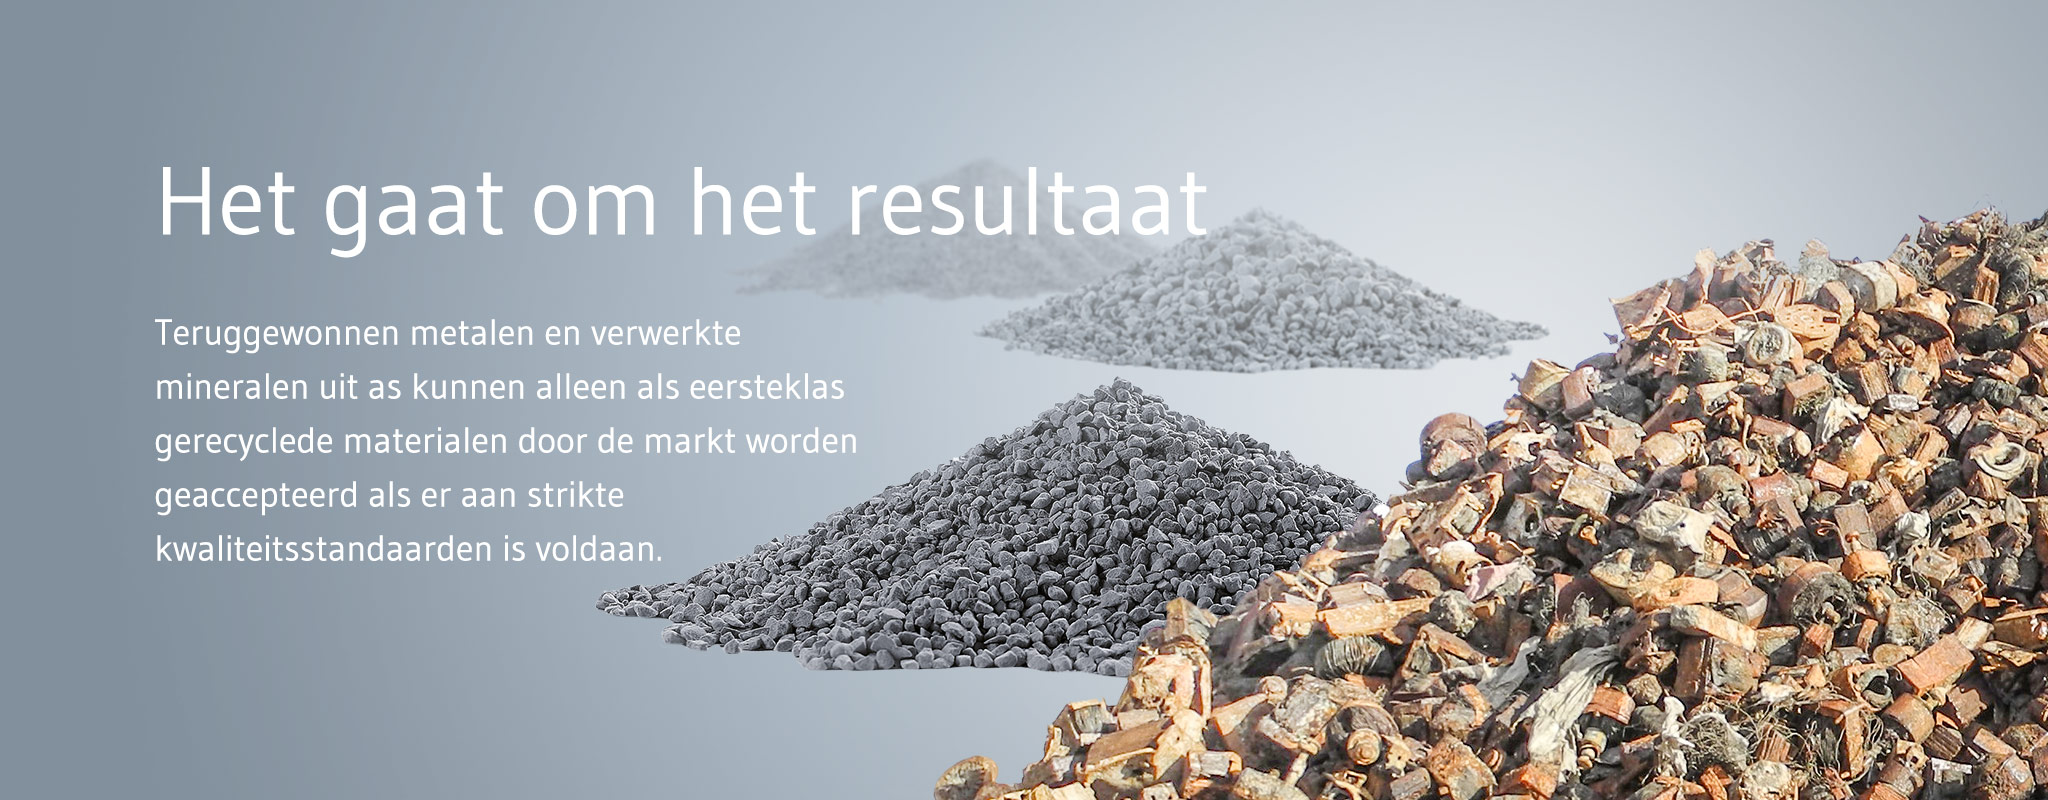 Duurzaam afvalbeheer rmx-processing_head_img_sustainable_waste_management_nl.jpg